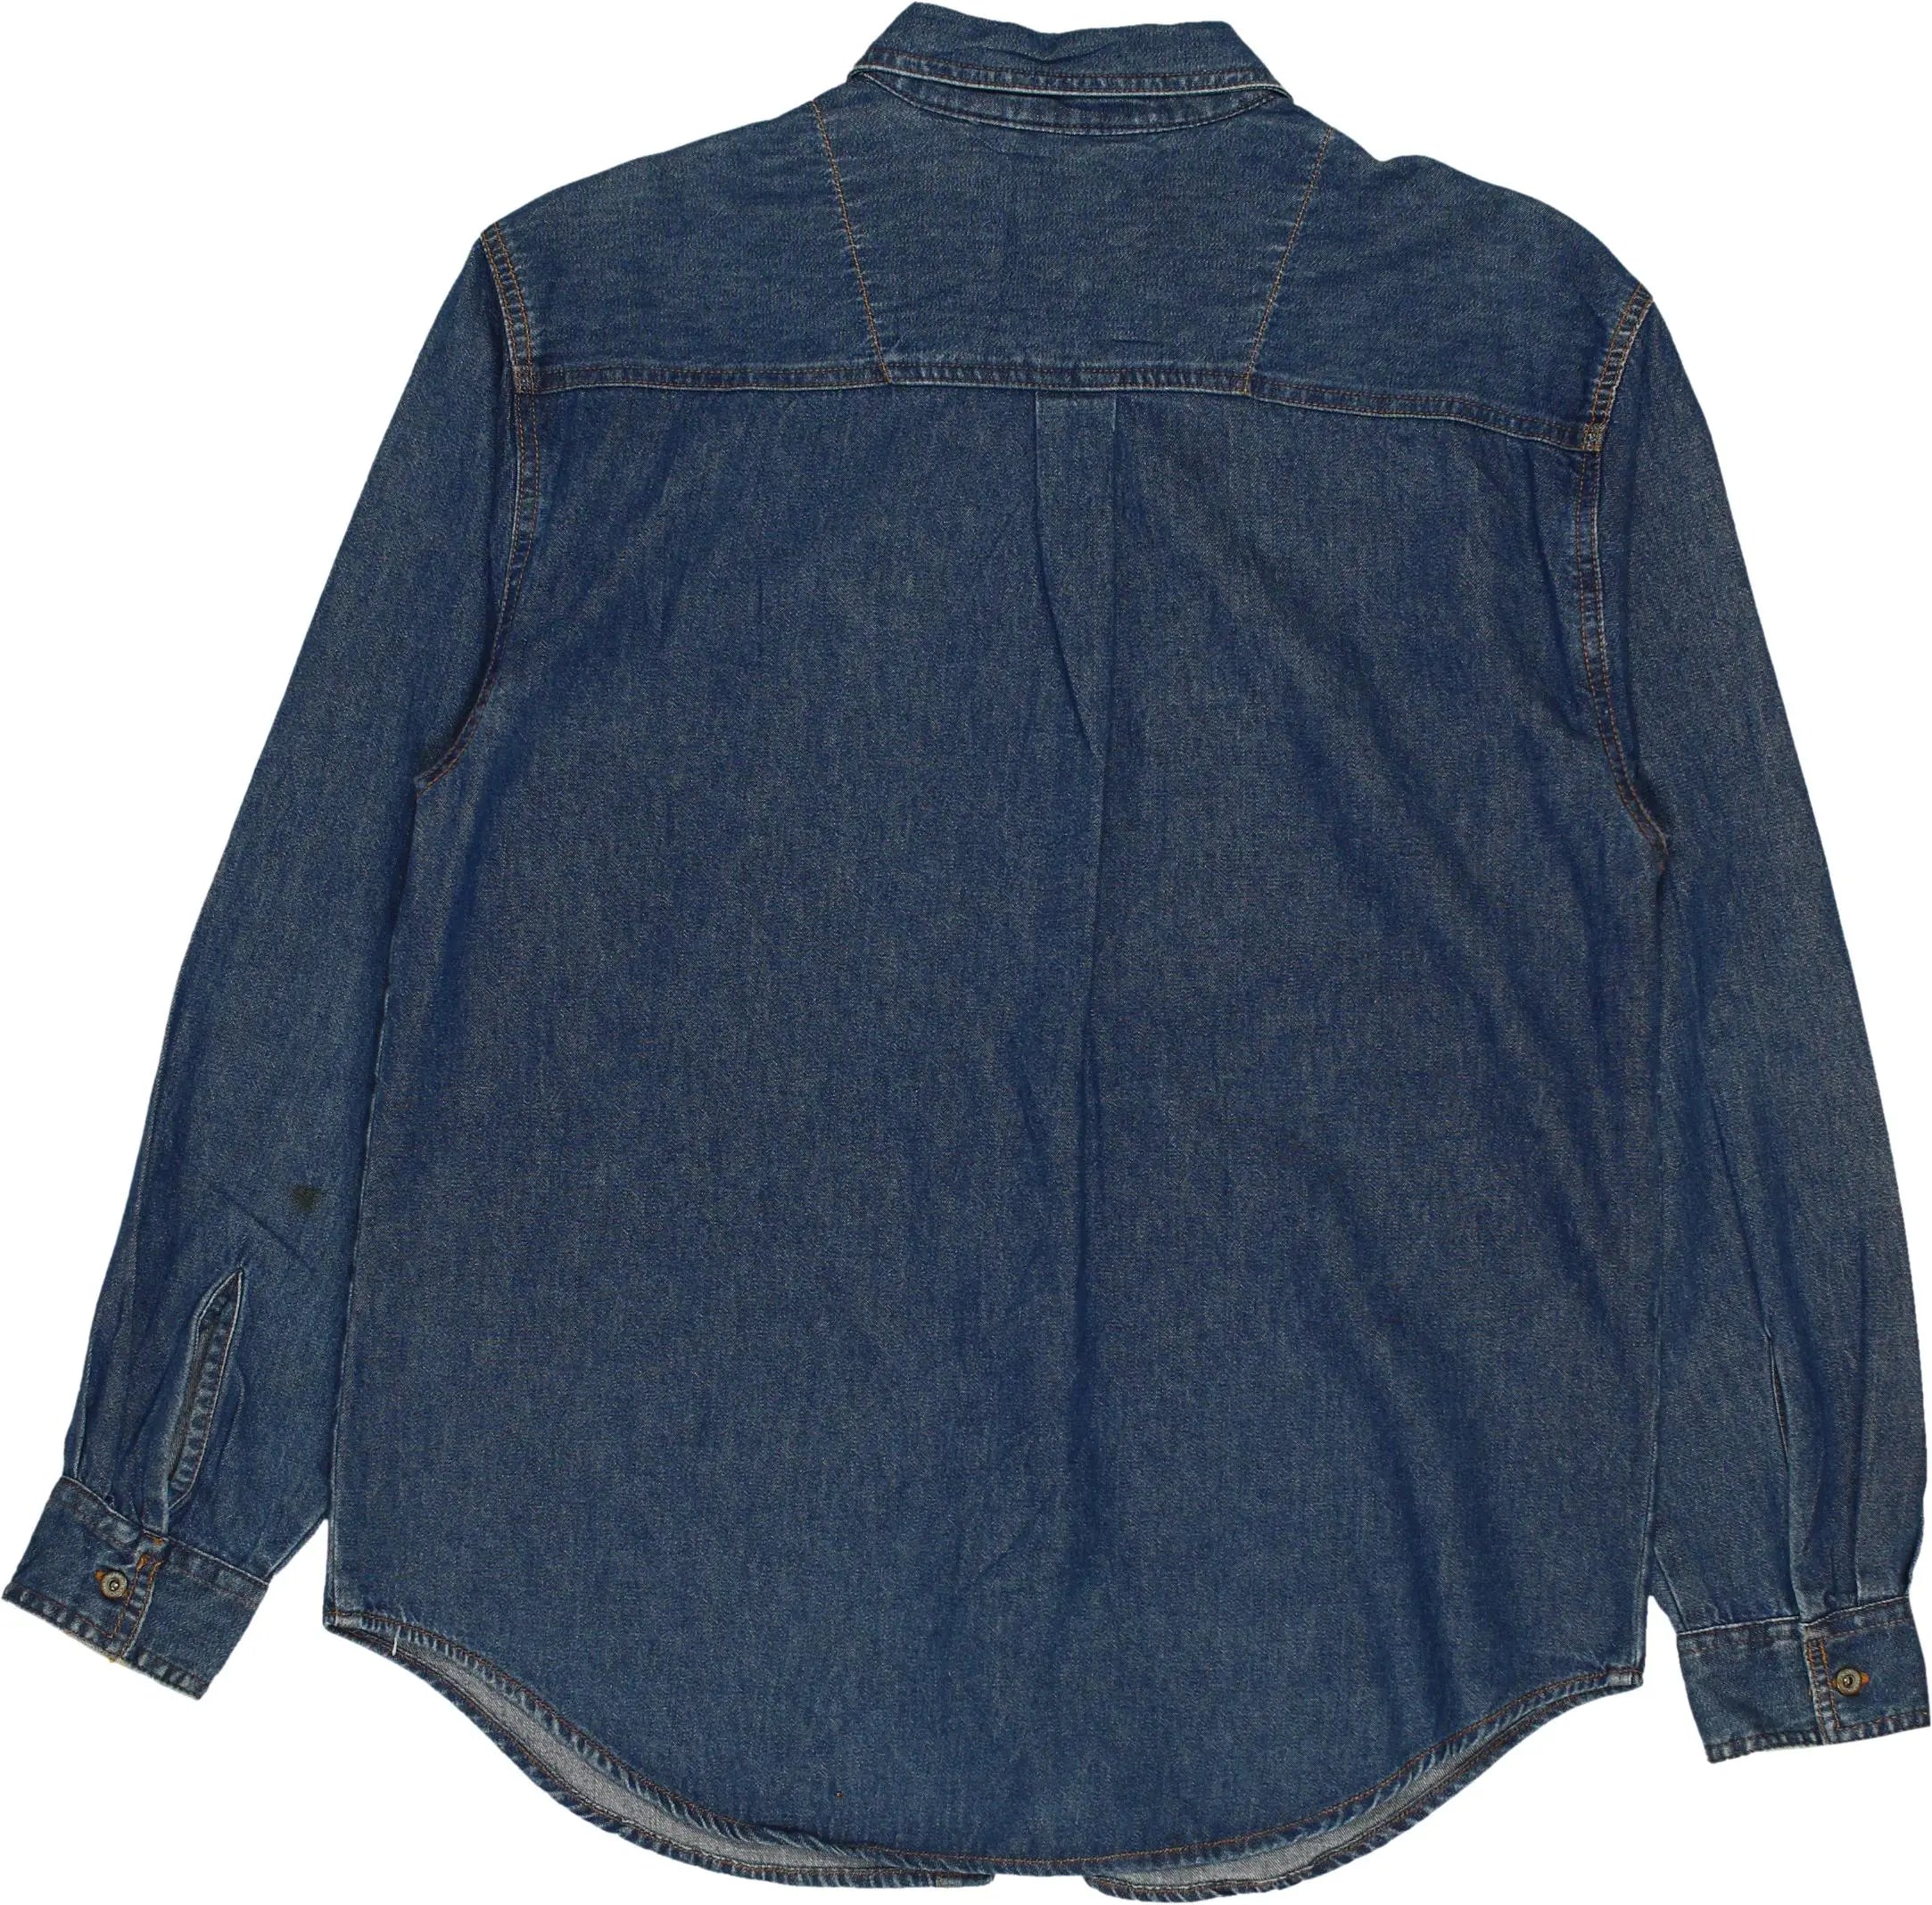 Billblass Jeans - 90s Denim Shirt- ThriftTale.com - Vintage and second handclothing